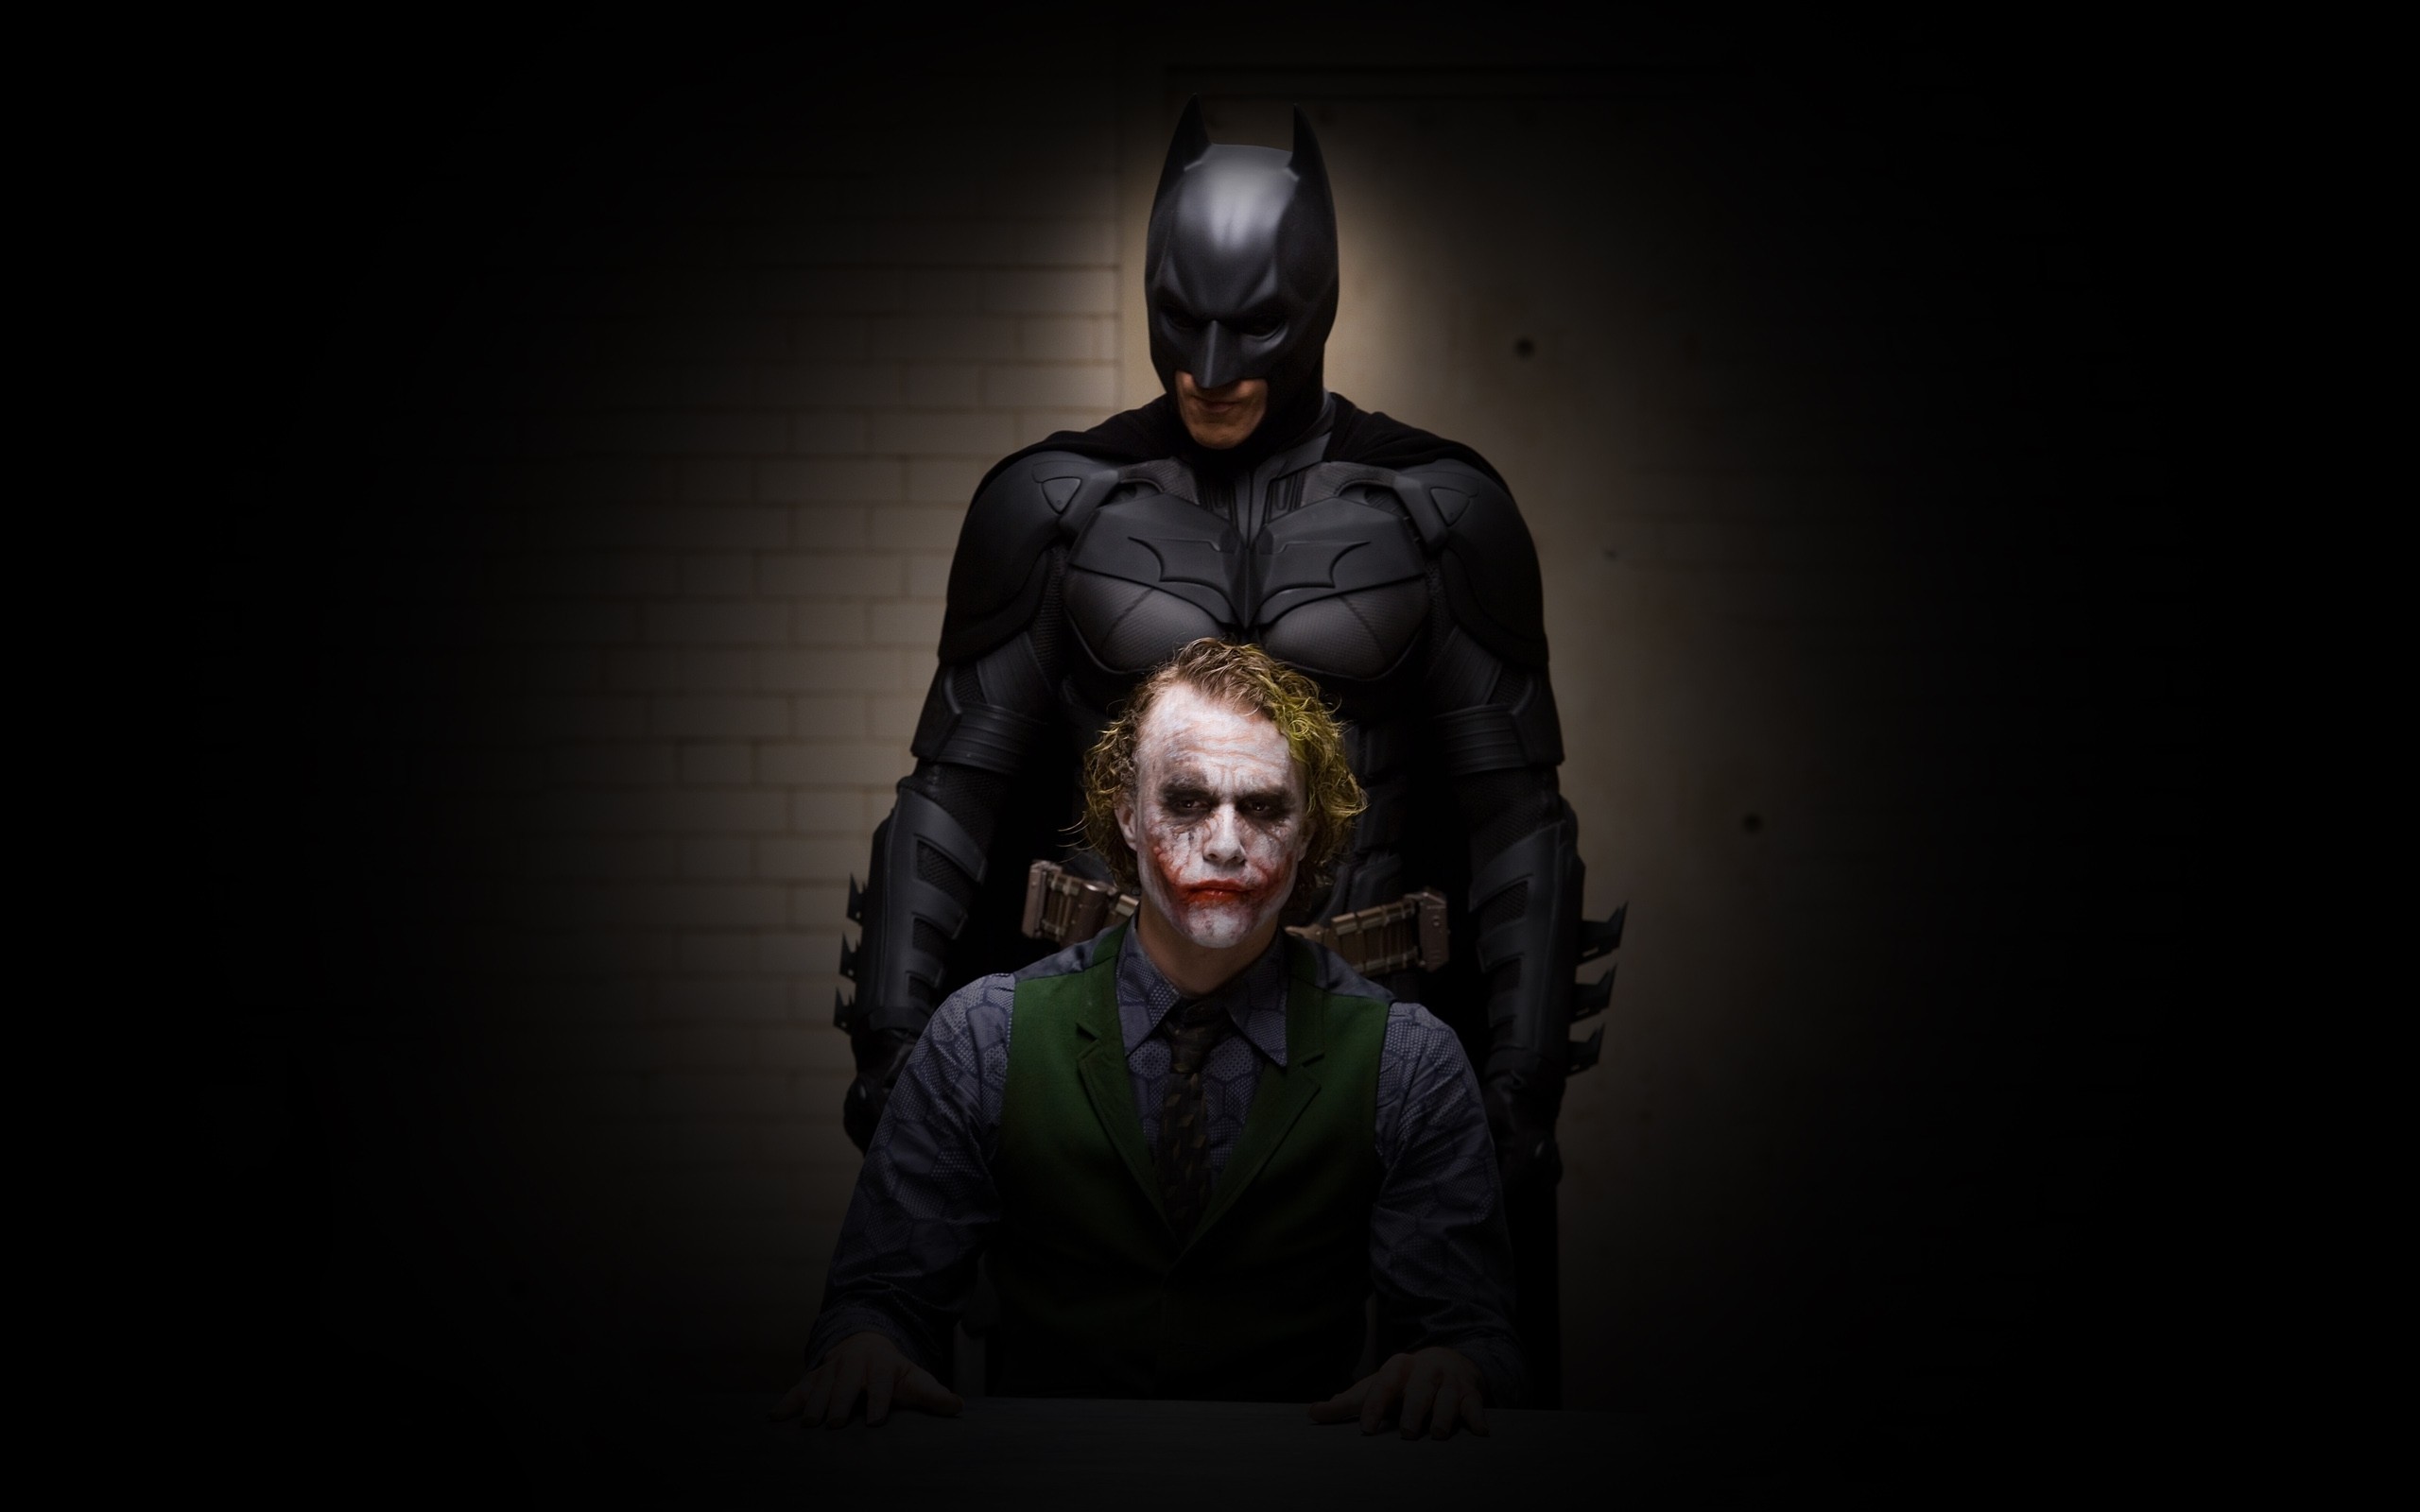 General 2560x1600 Batman Joker movies The Dark Knight Christian Bale Heath Ledger film stills low light vignette